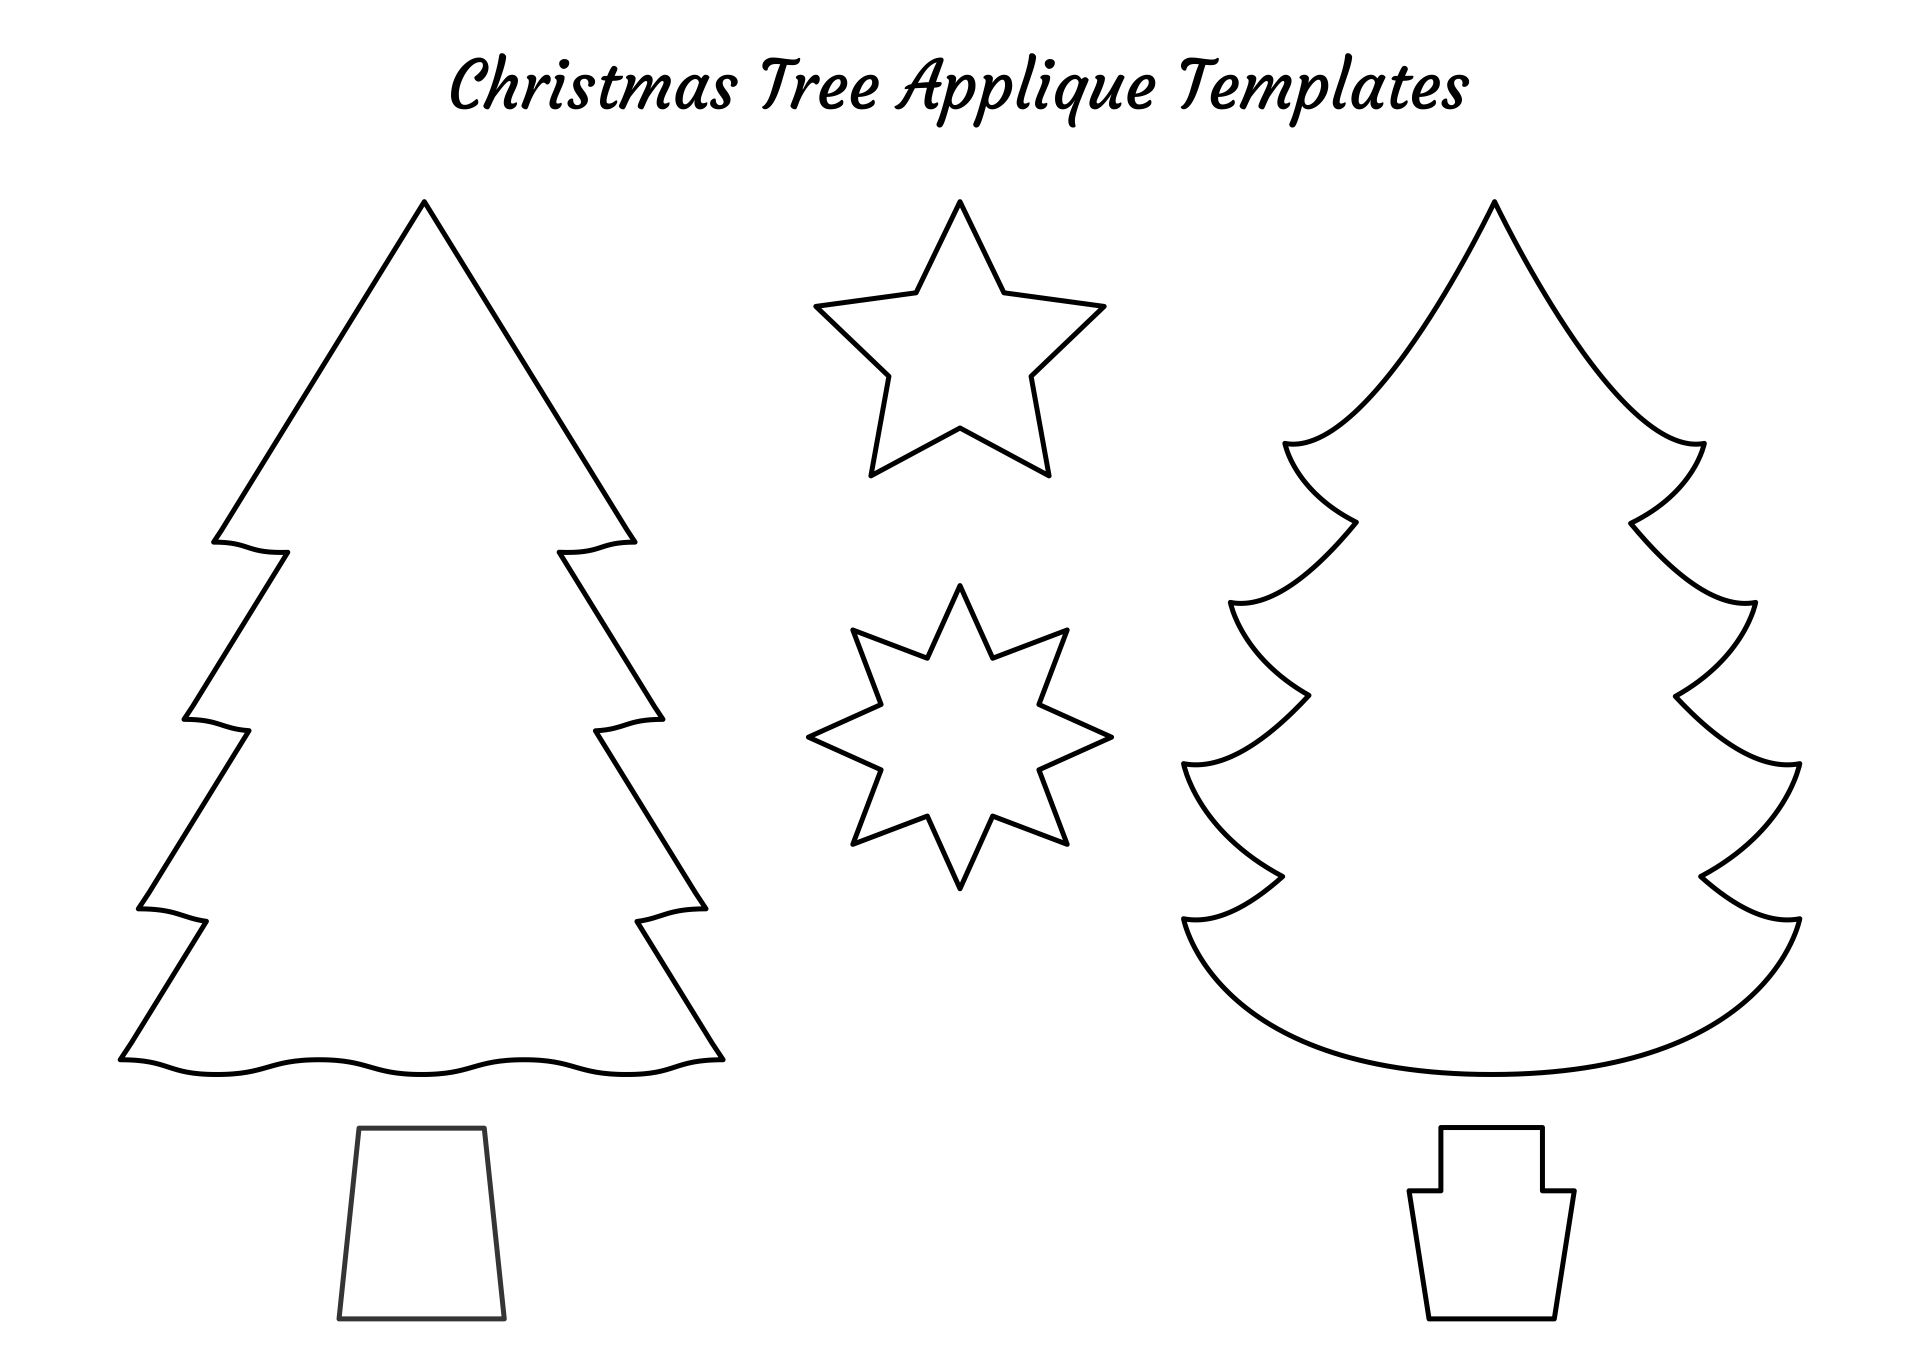 Printable Christmas Tree Applique Templates